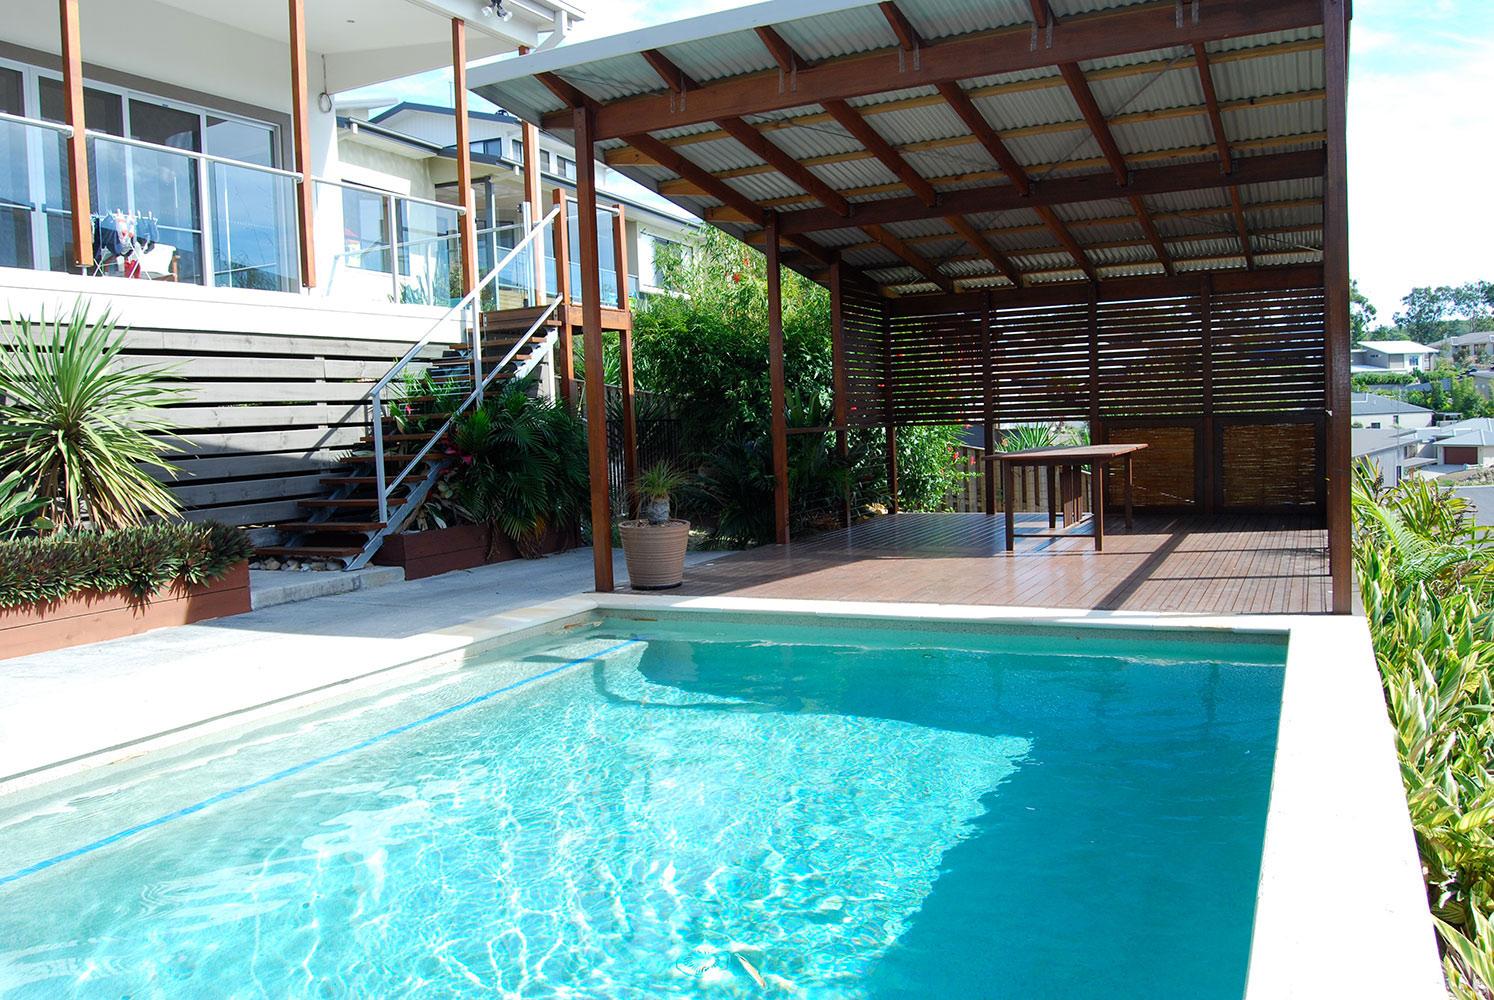 Pool House, Mt Gravatt, Brisbane